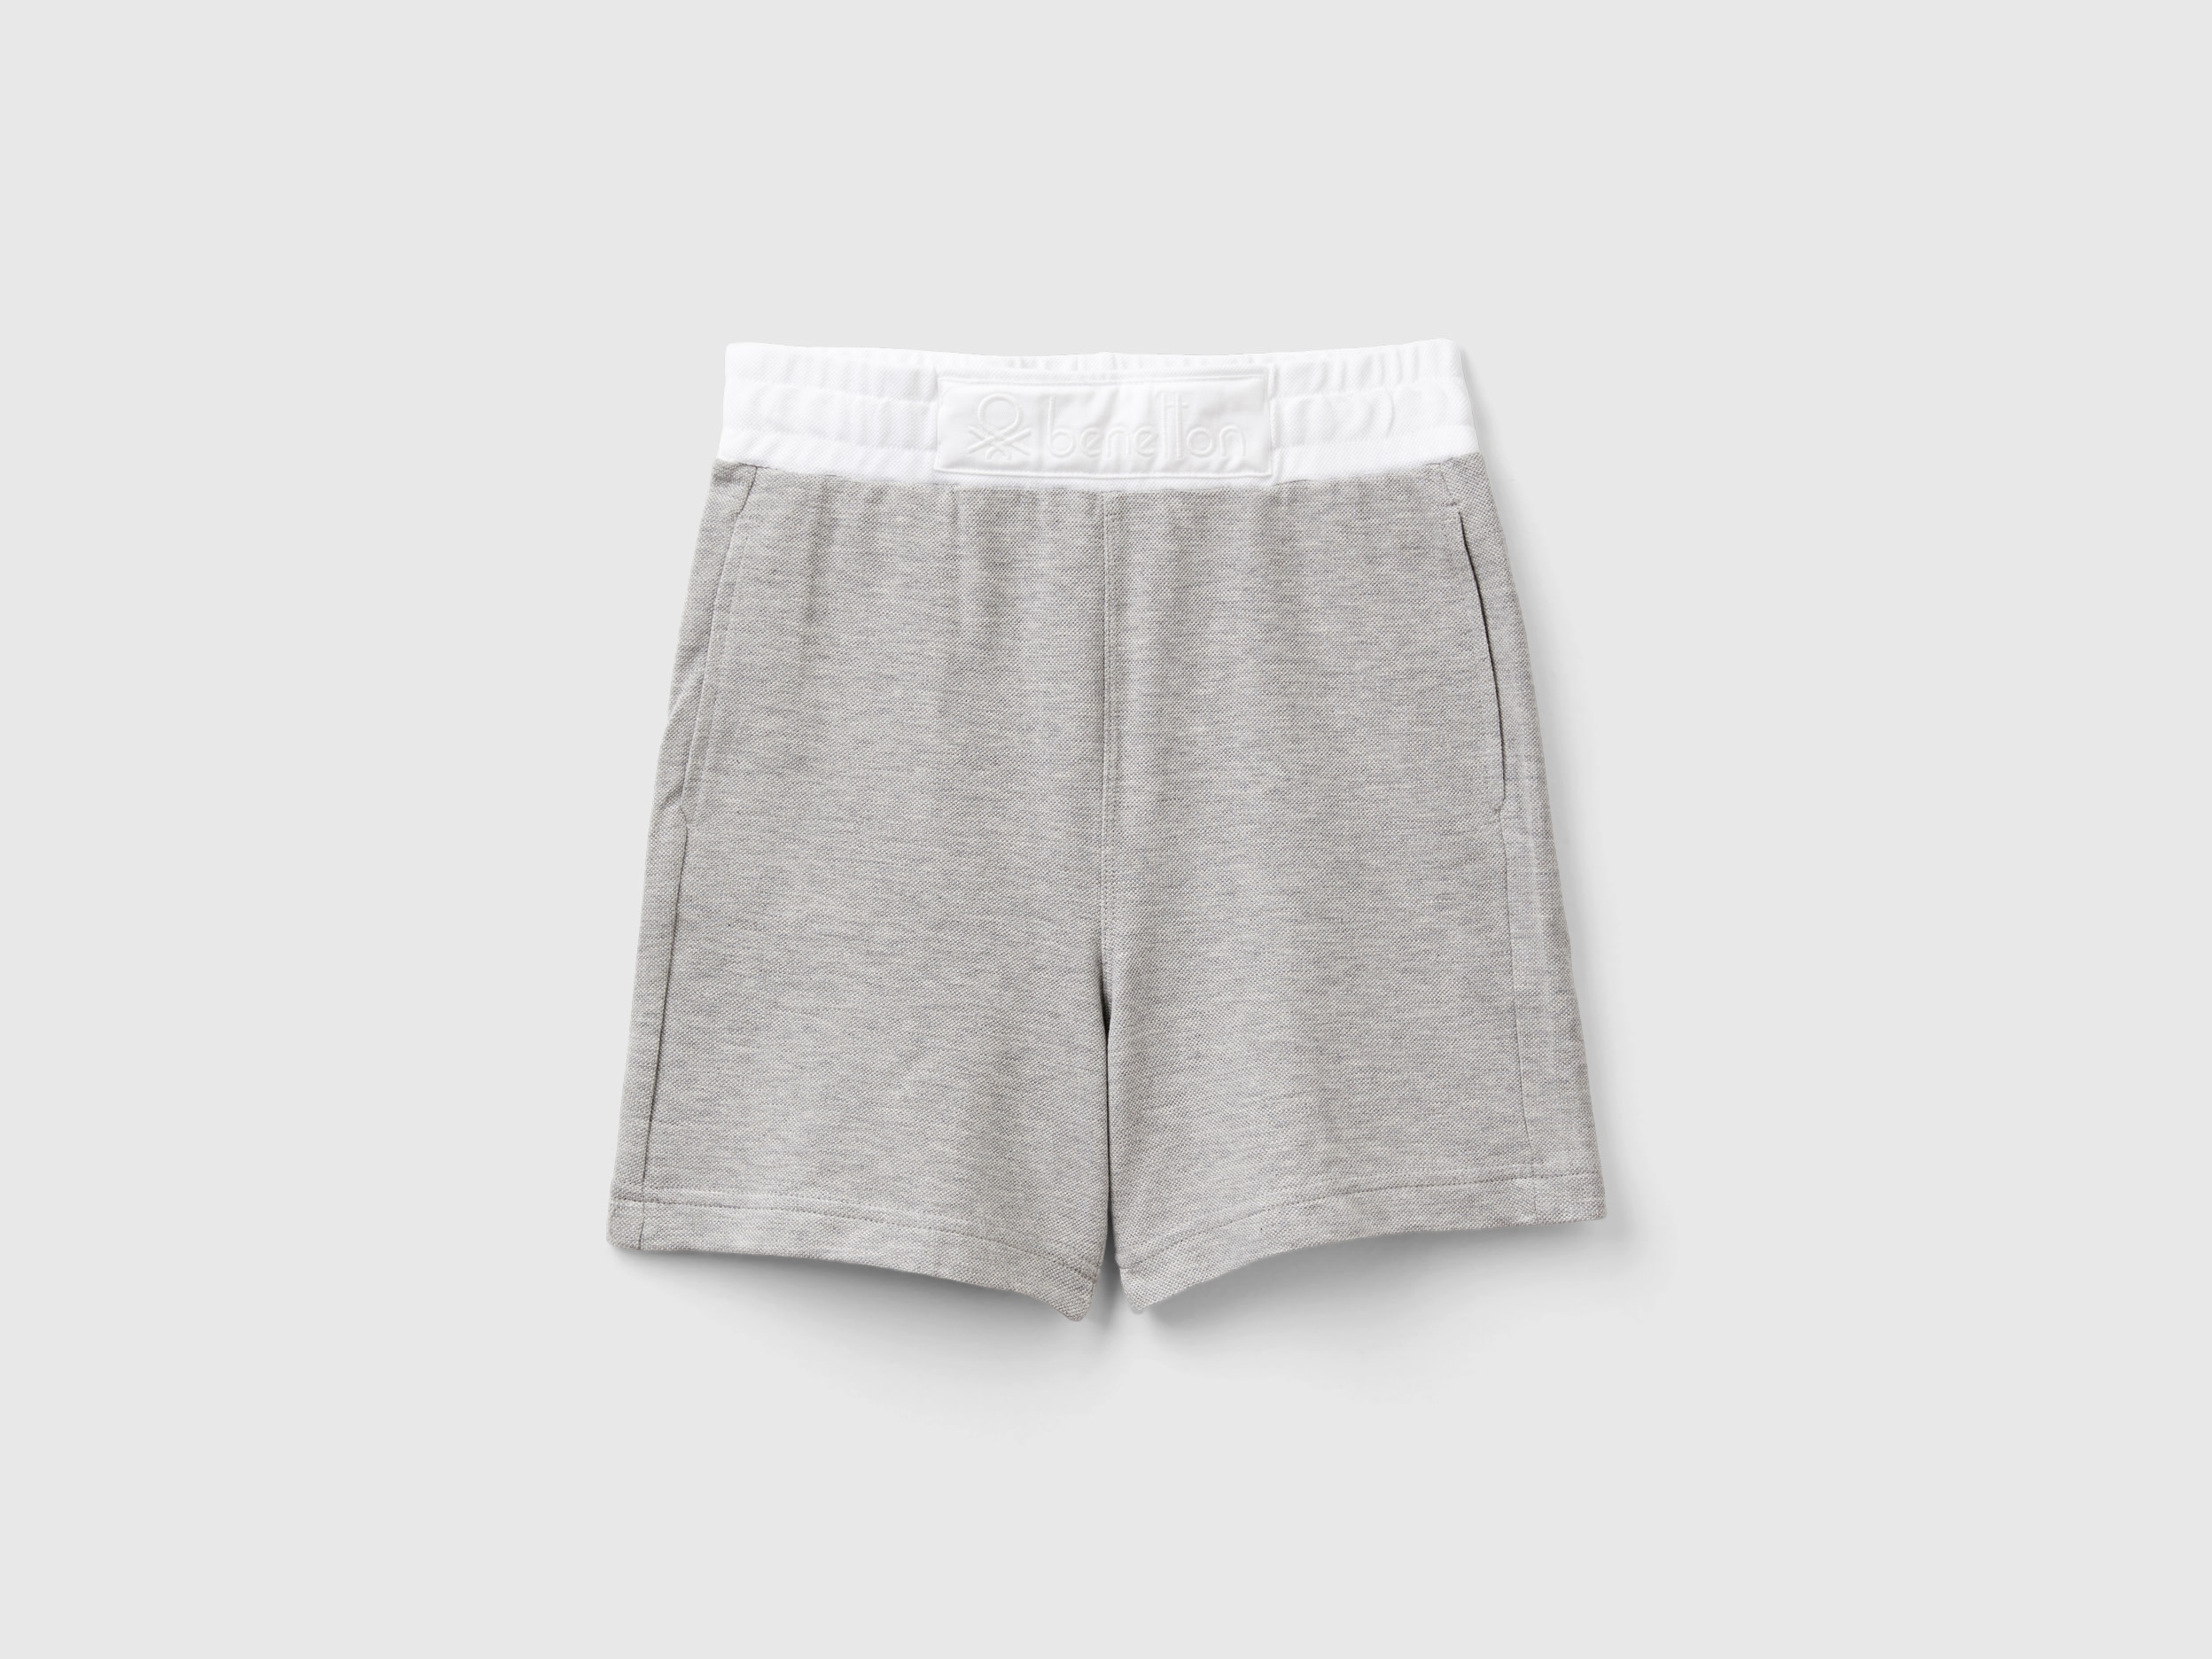 Image of Benetton, Organic Cotton Shorts, size 3XL, Light Gray, Kids